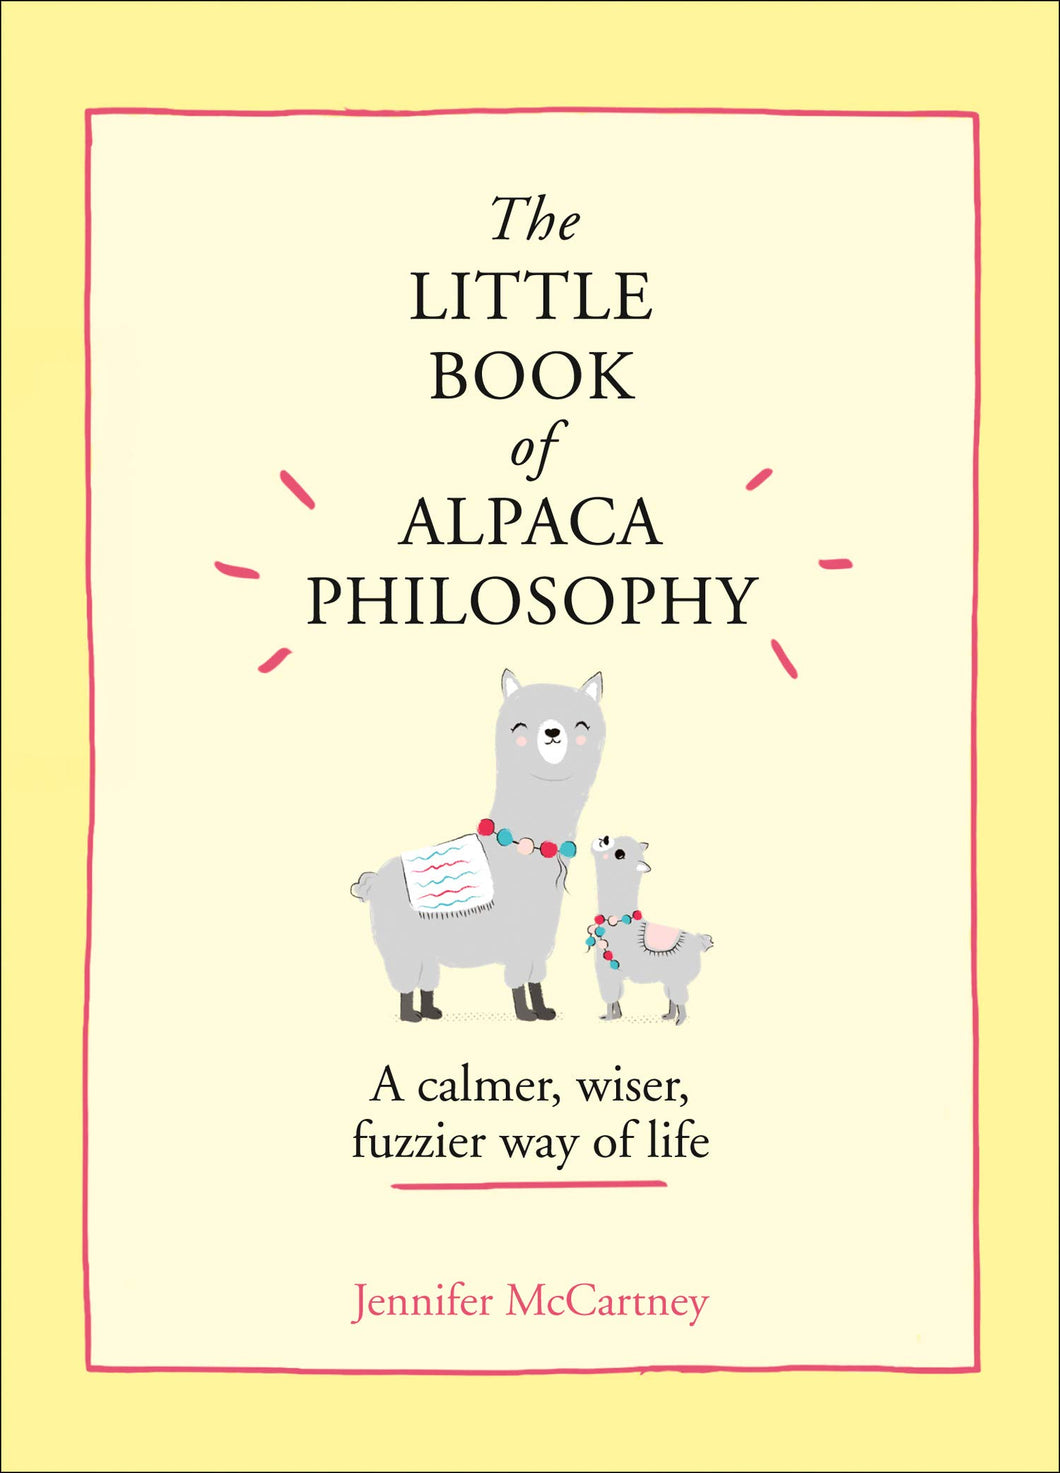 The Little Book of Alpaca Philosophy: A calmer, wiser, fuzzier way of life